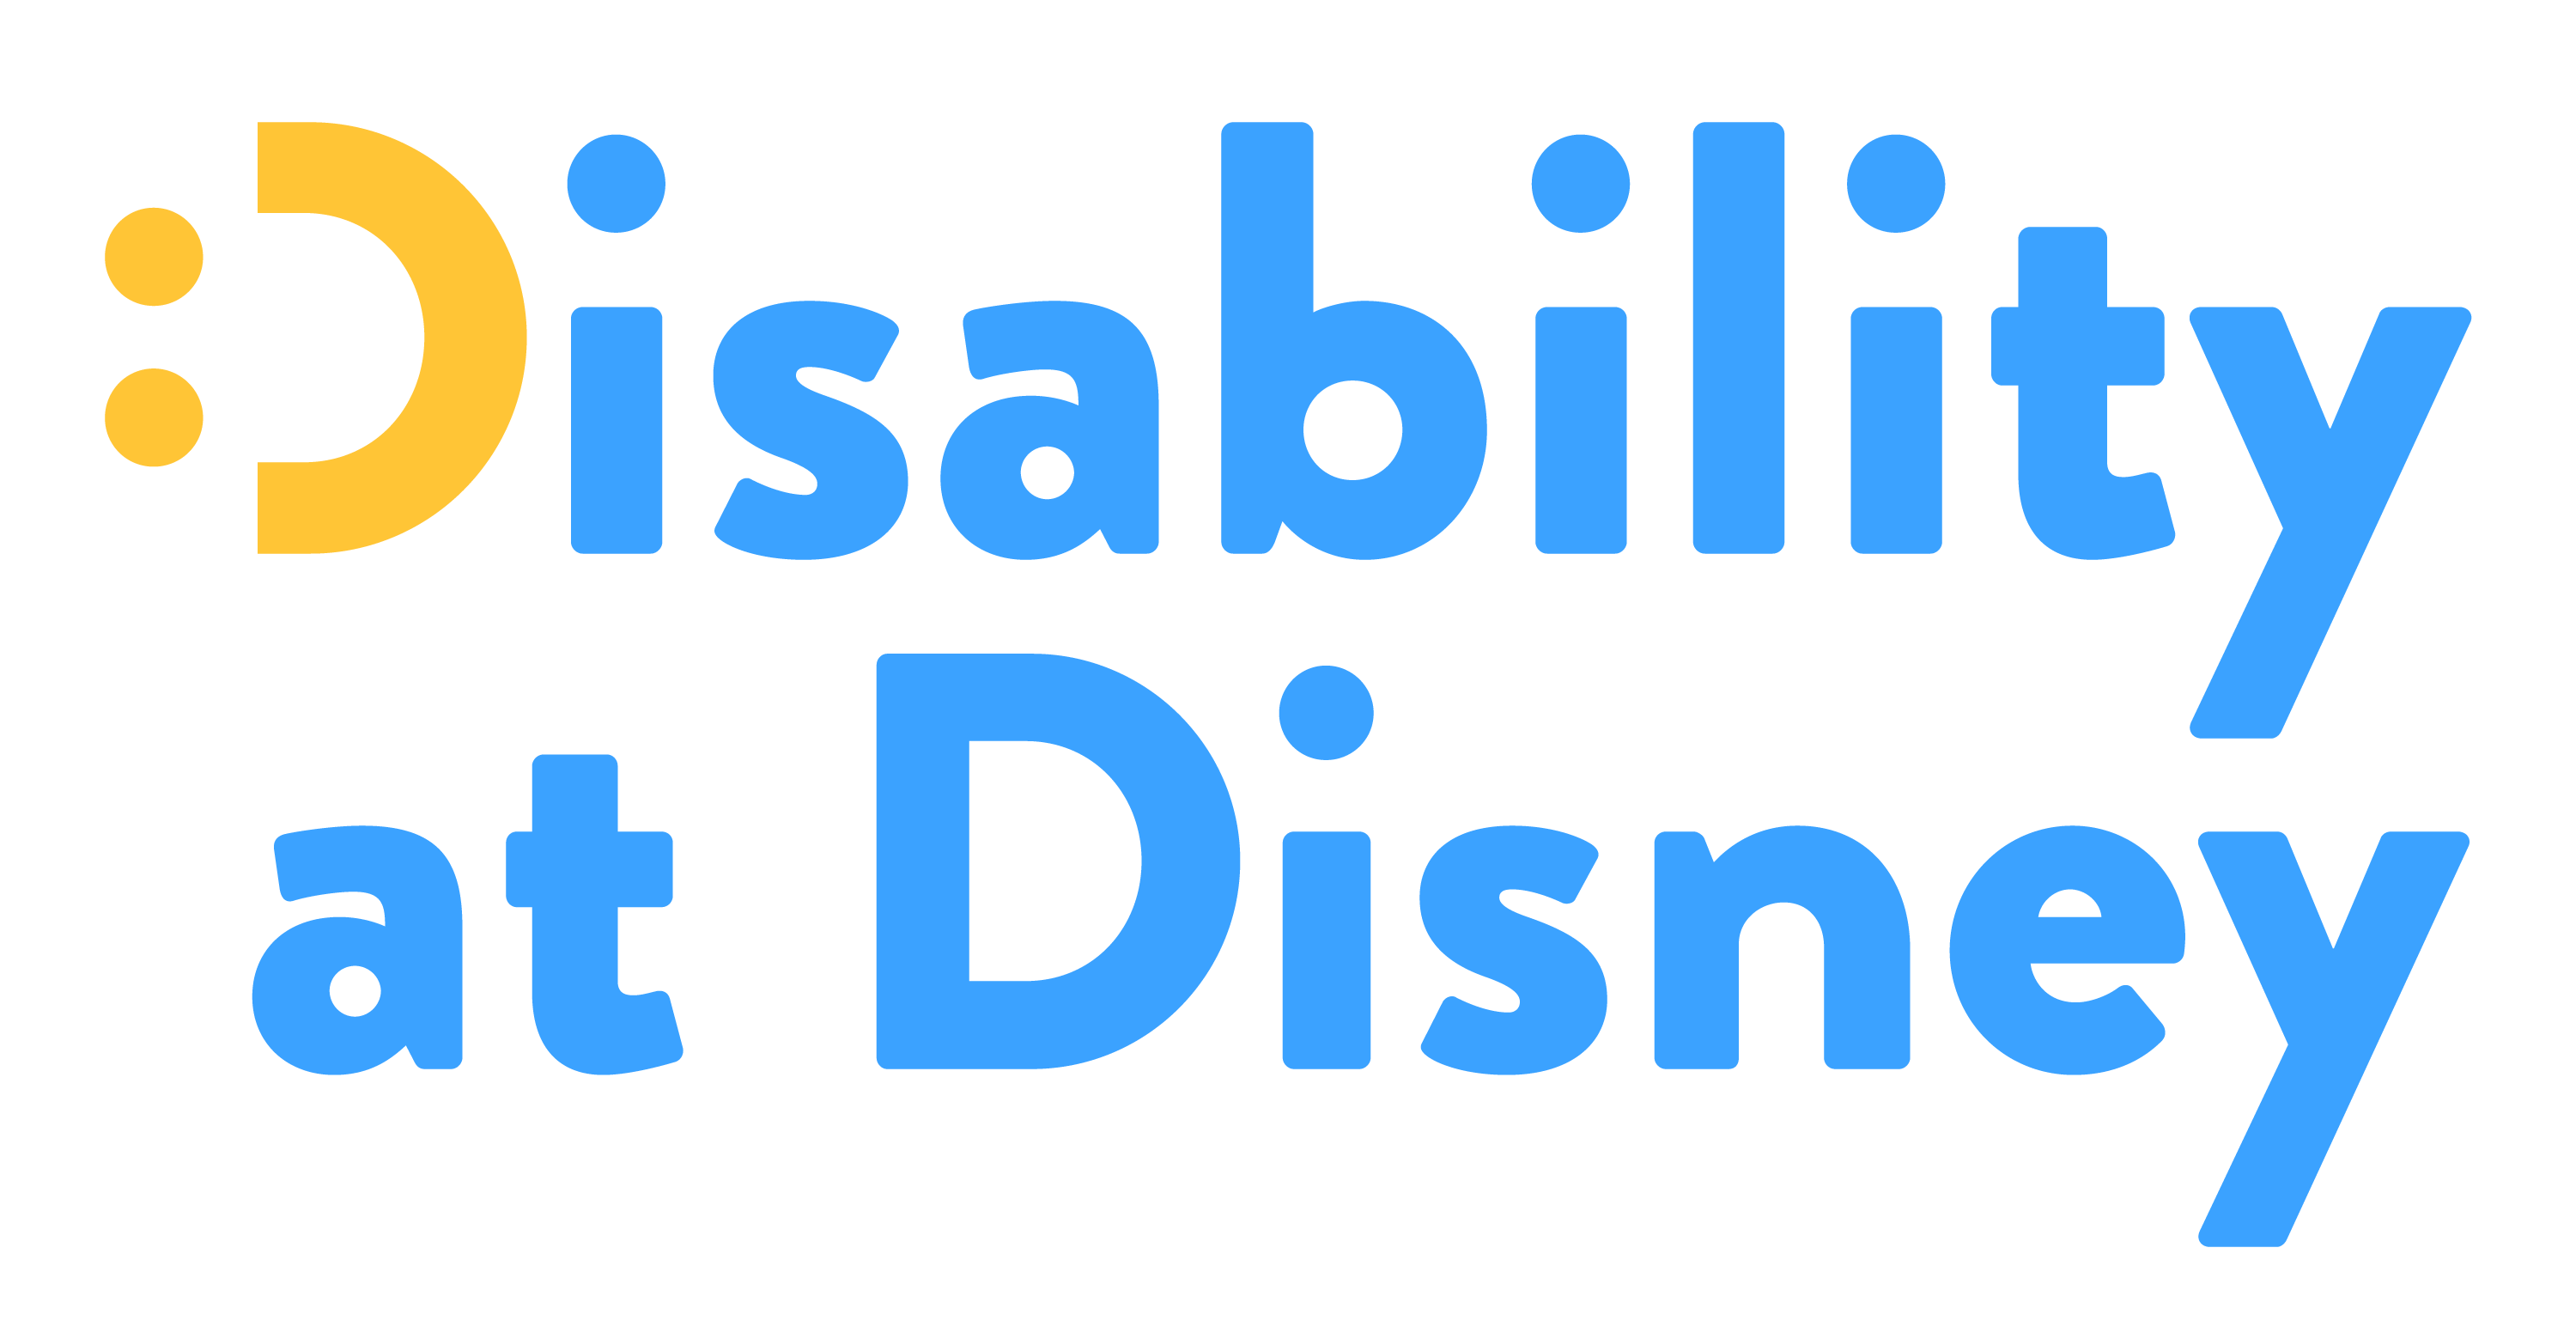 Disability at Disney